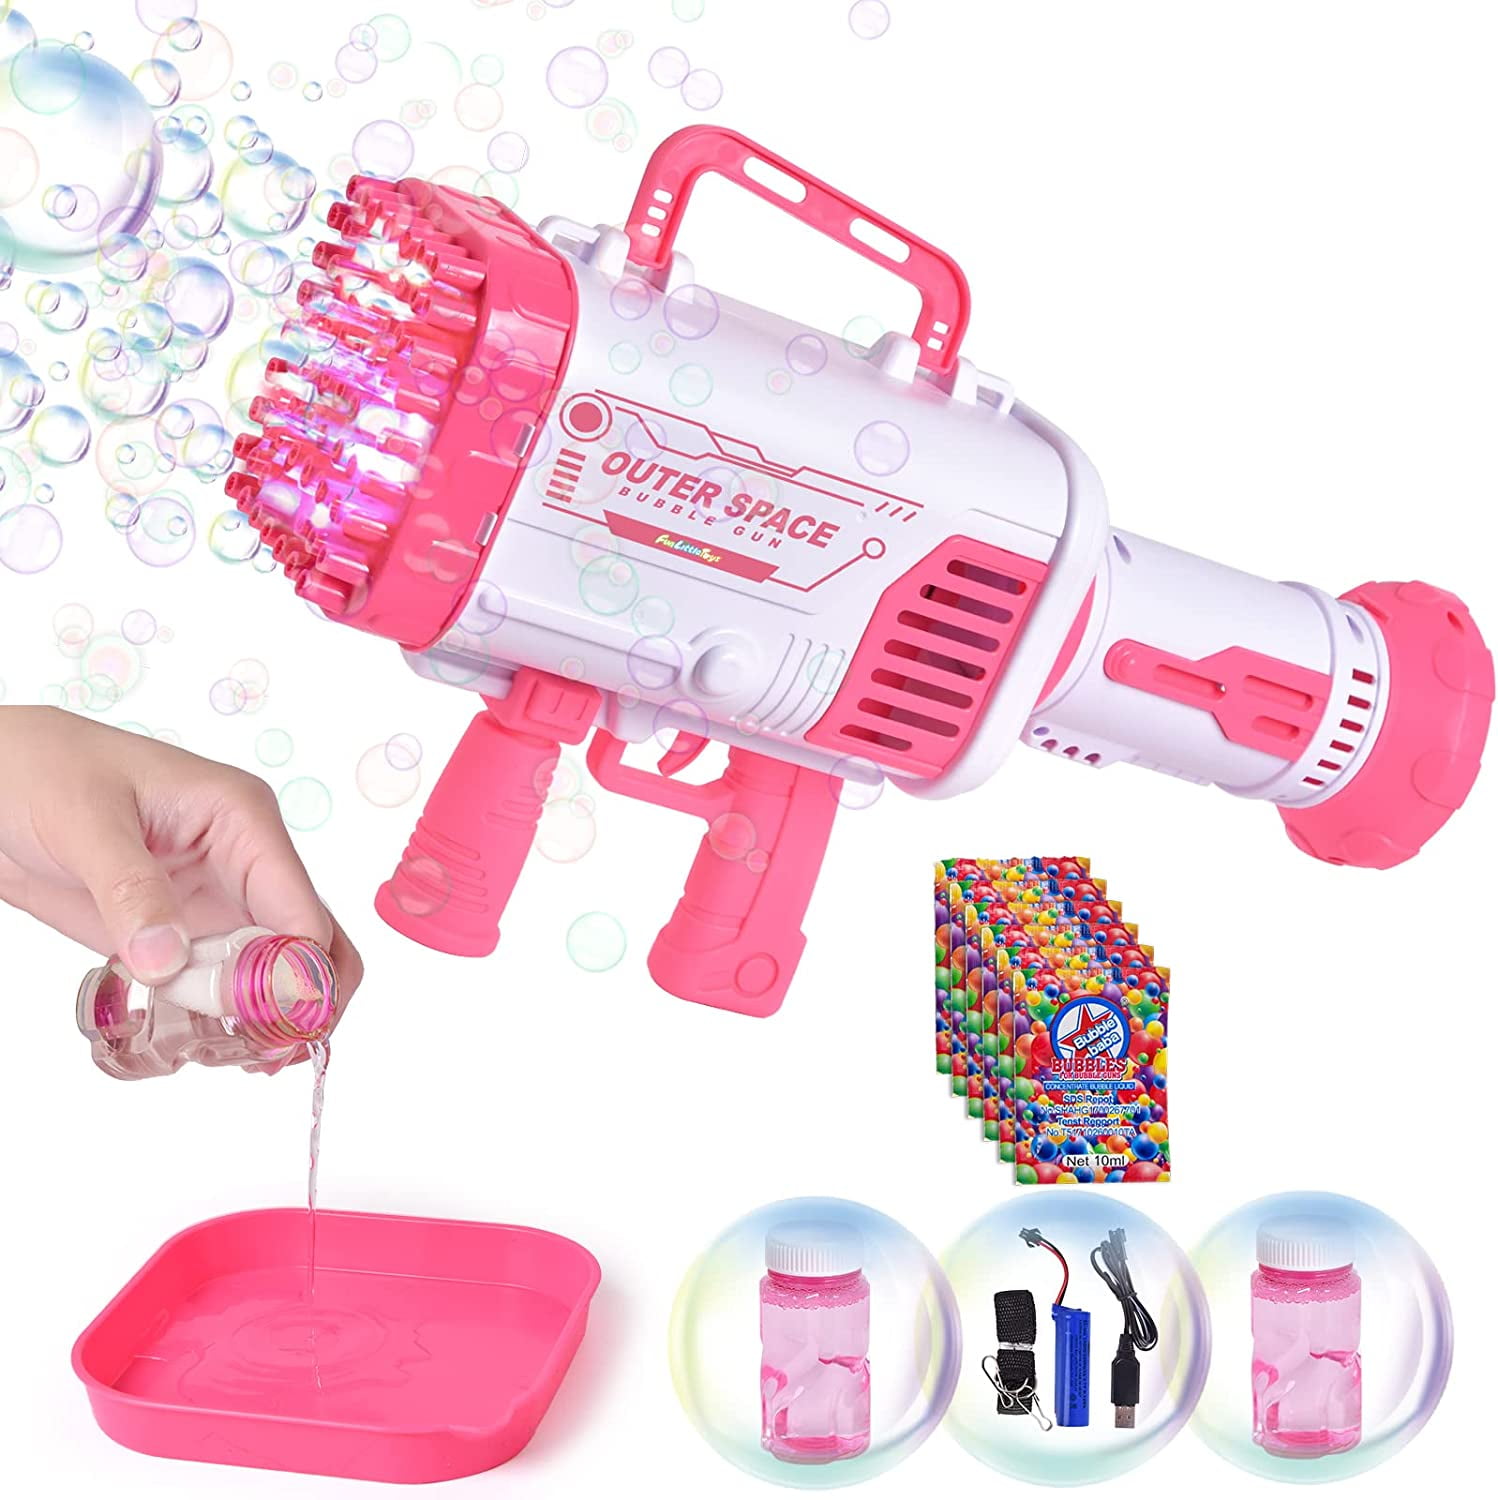 Fun Little Toys 14 Pcs Bubble Machine Gun with 64 Holes & Lights, Pink  Bazooka Bubble Gun for Kids Adults Bubble Blower Machine Gun with Hand held